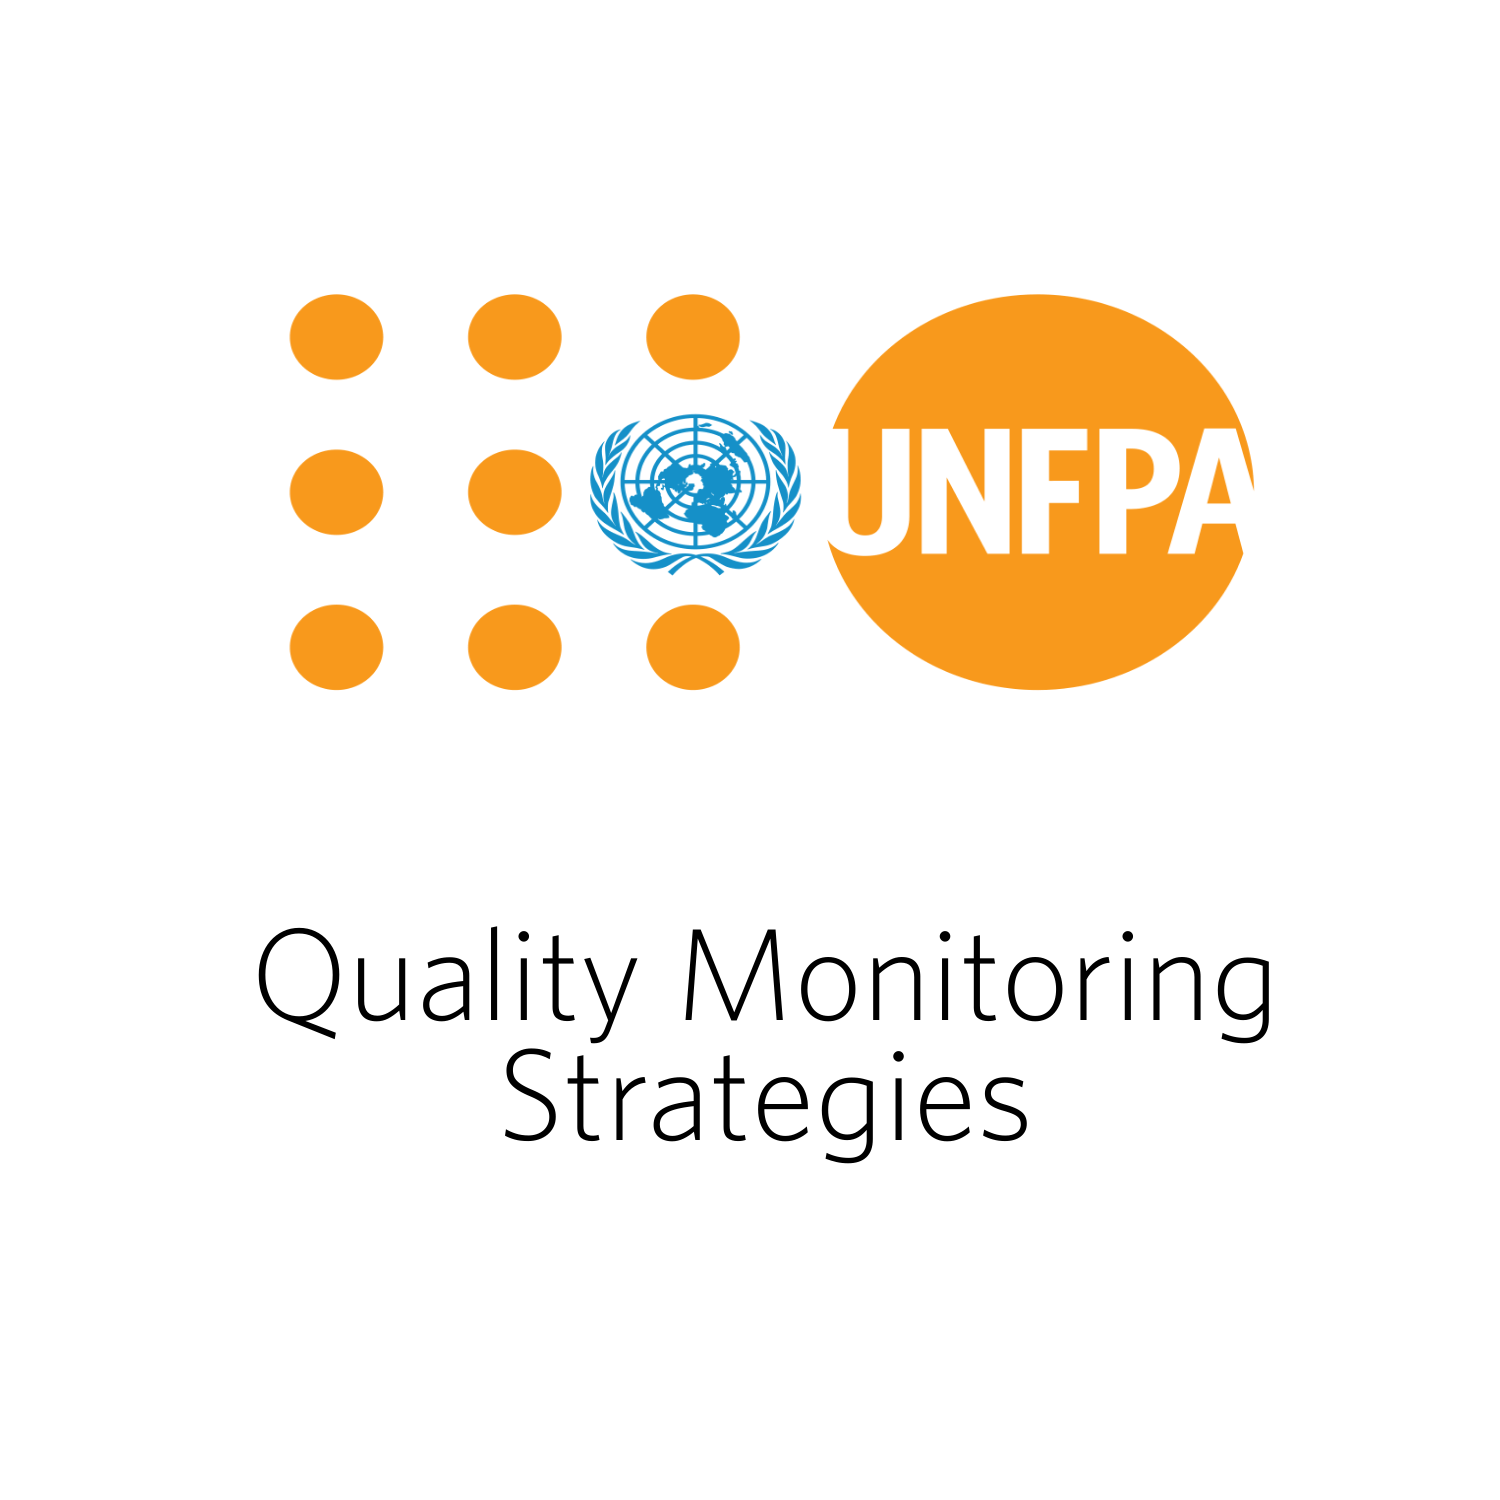 Quality monitoring strategies